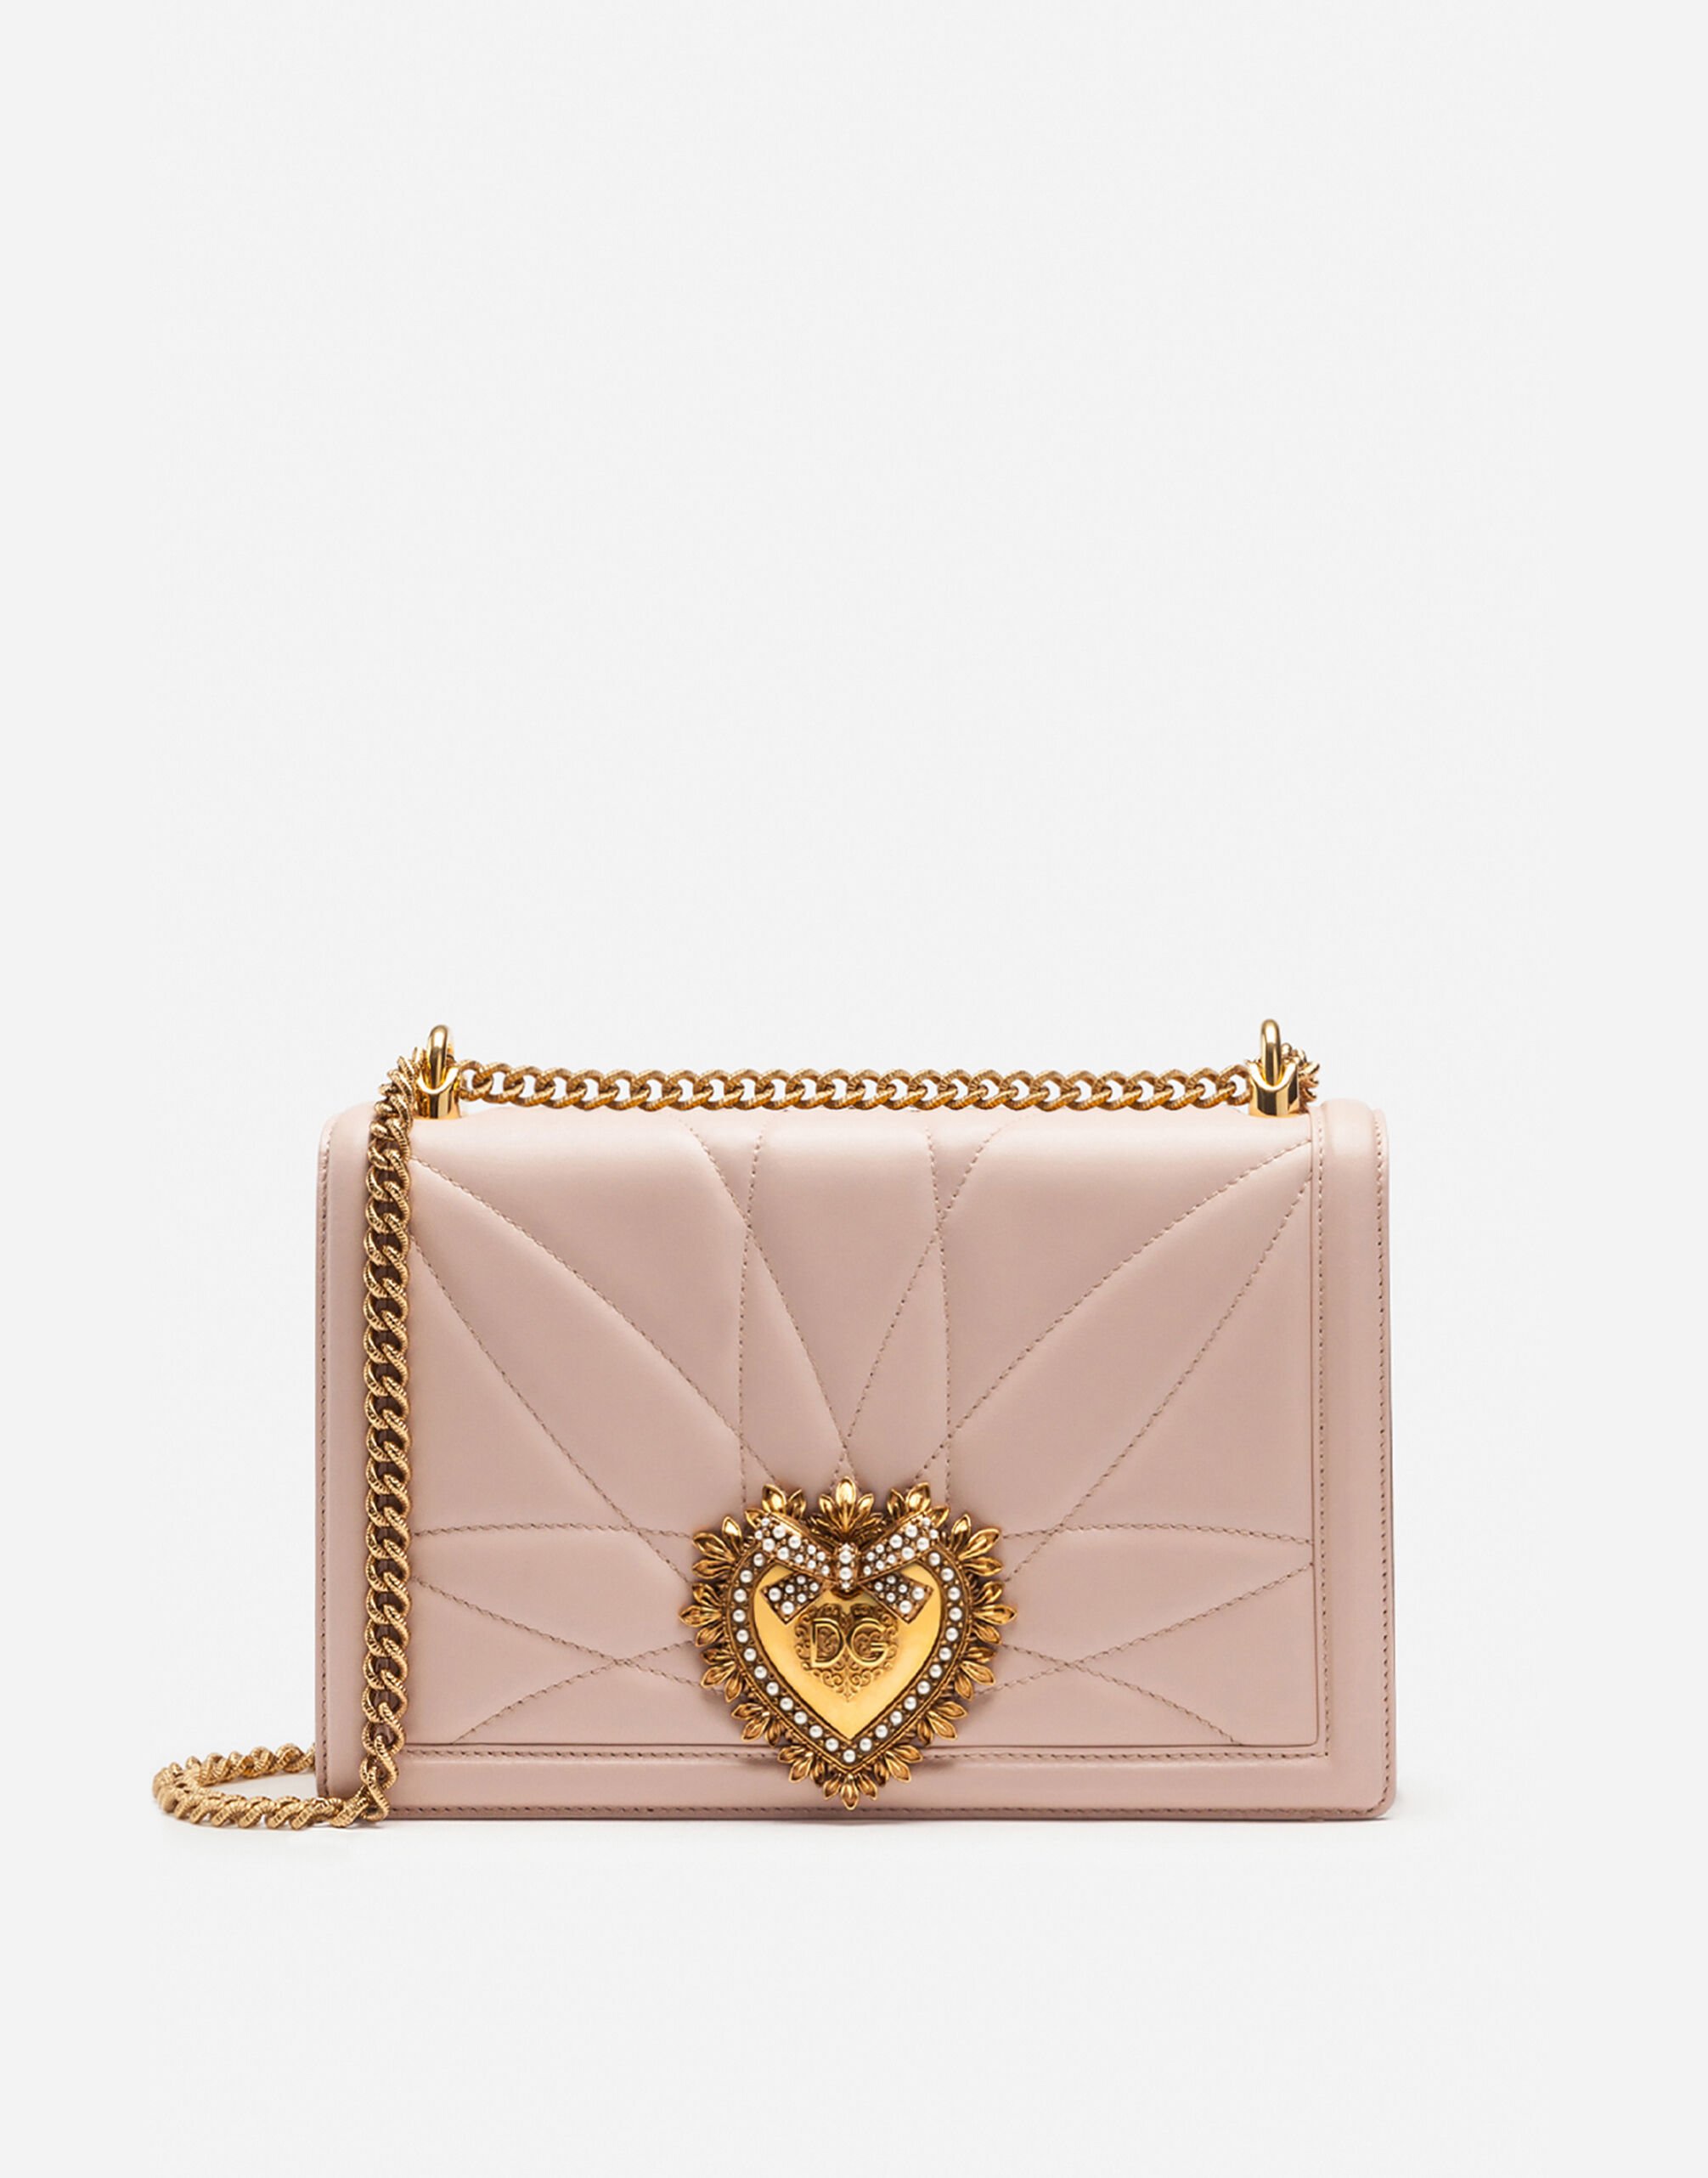 Buy GUESS Sestri Luxury PU Zipper Closure Casual Women's Satchel Bag  (CAMEL, MEDIUM) at Amazon.in